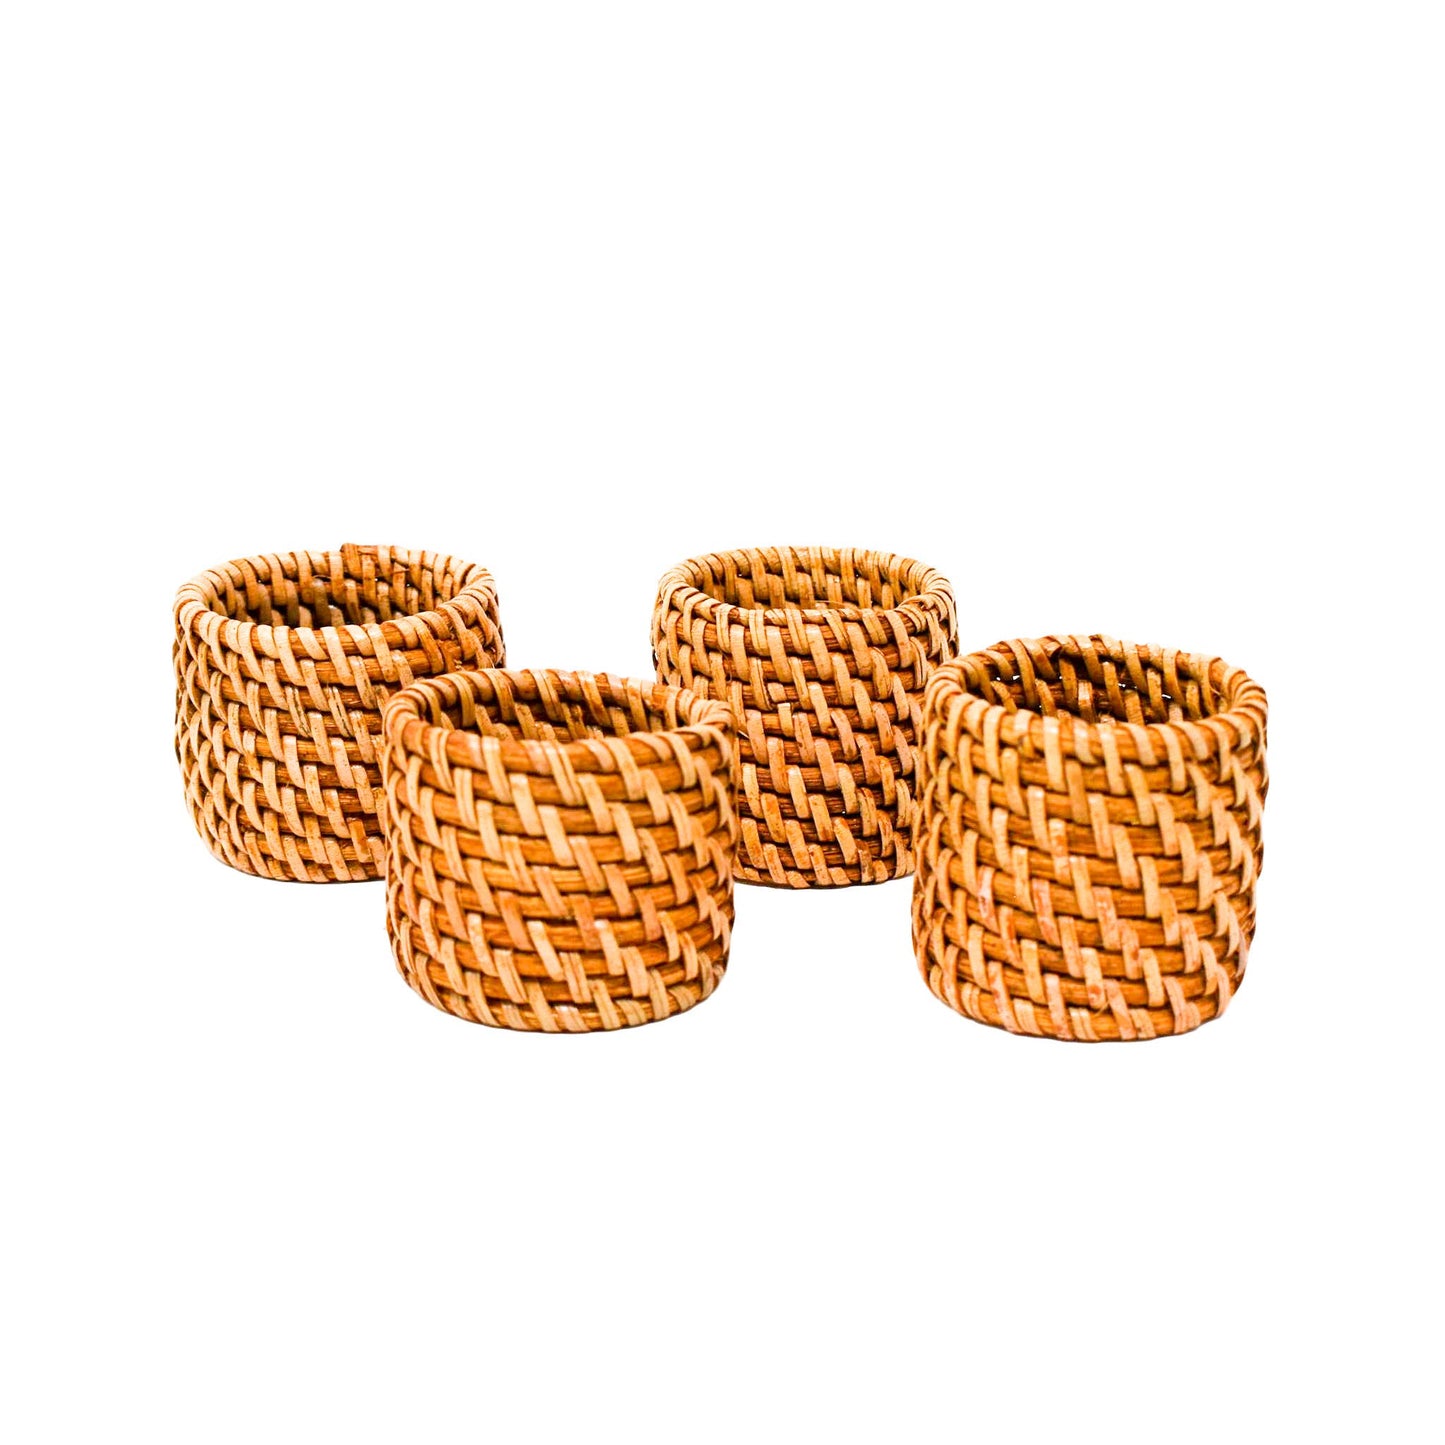 Handmade Rattan Napkin Rings - Set of 2